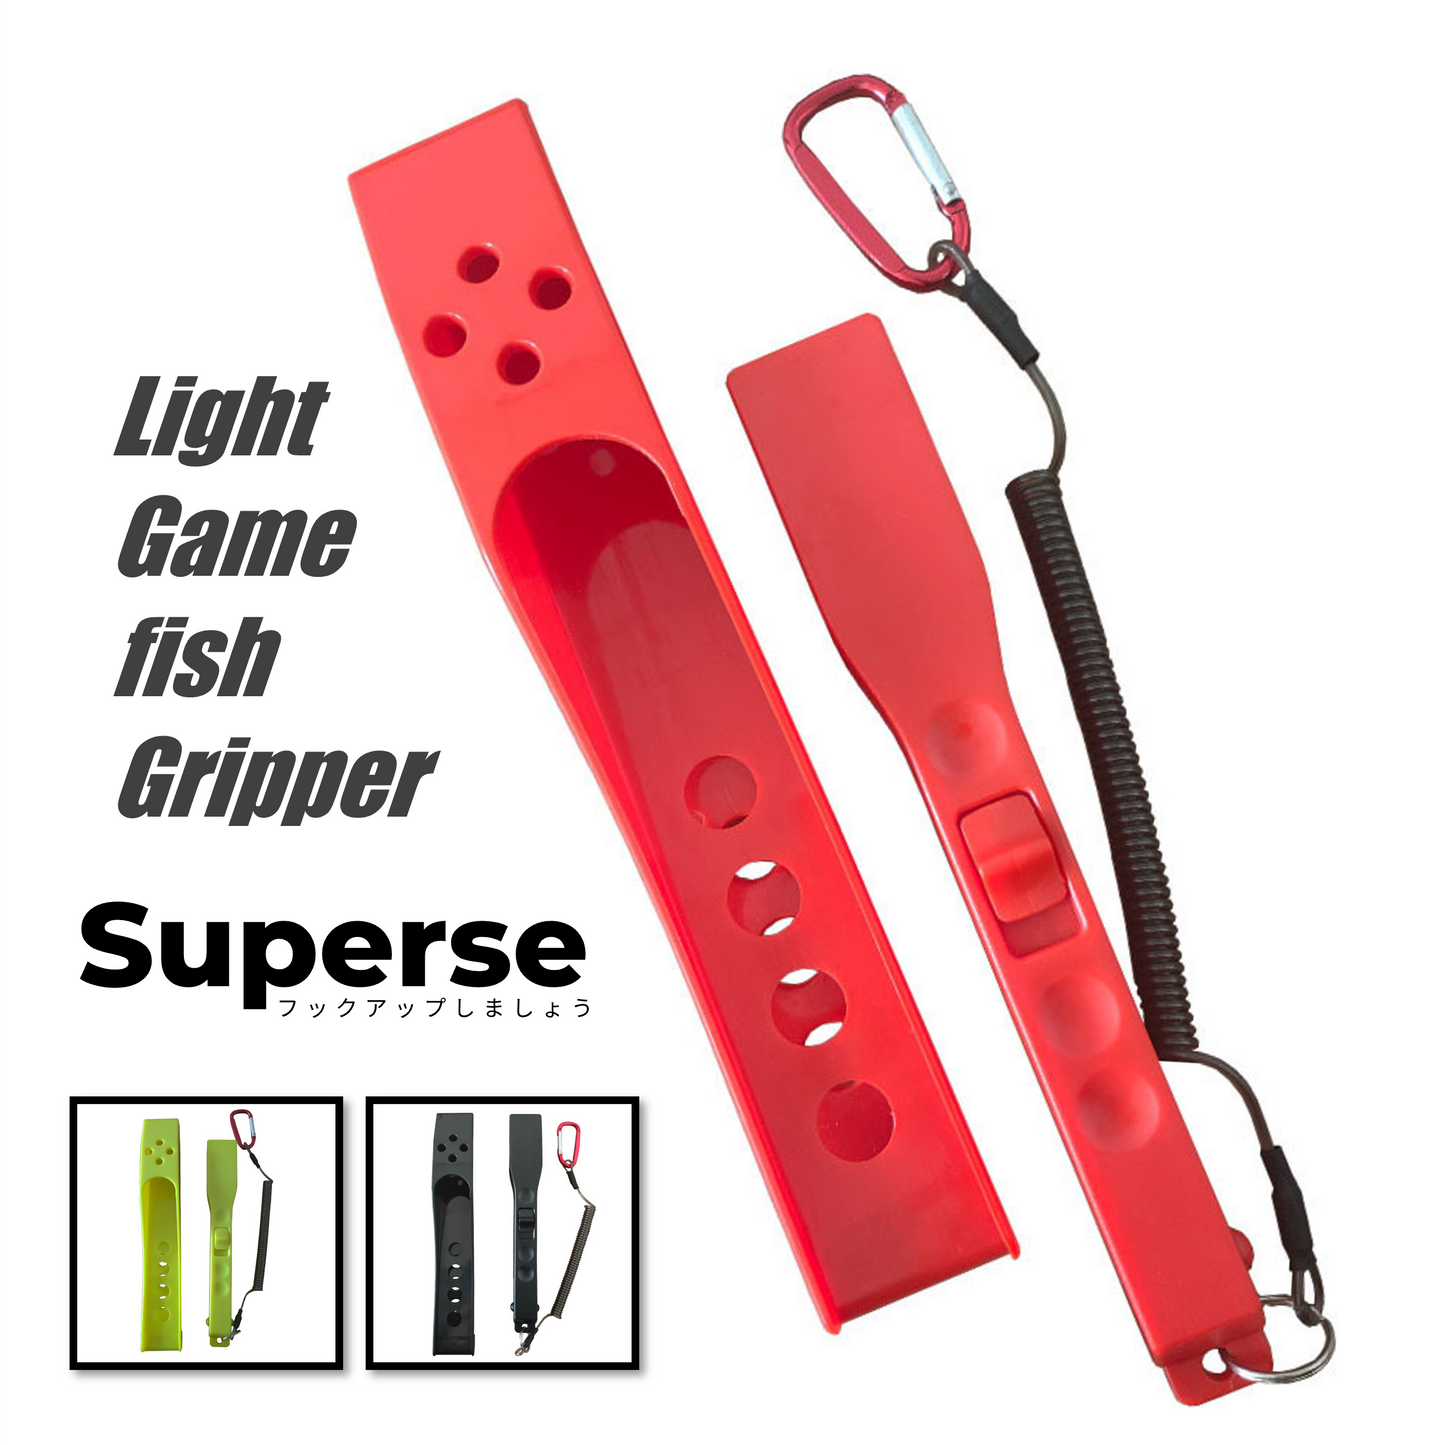 Superse Light Game fish Gripper FG004